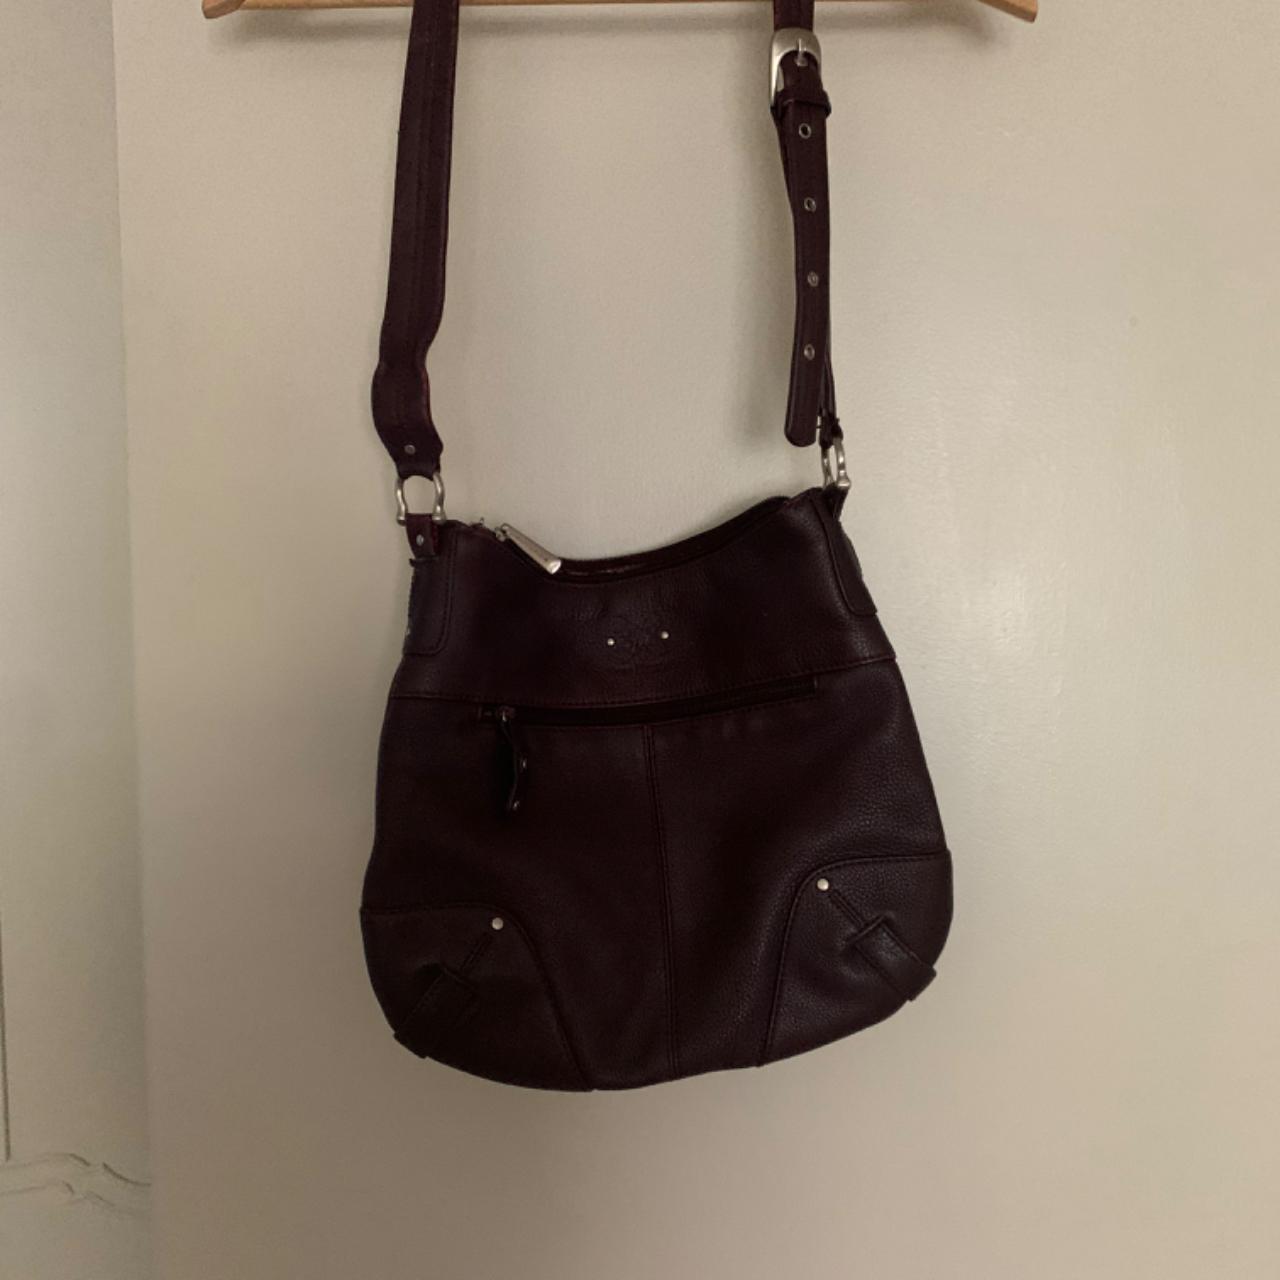 STONE MOUNTAIN Purse Brown Textured Leather Shoulder Bag 15x10x5 Brass  Hardware | eBay